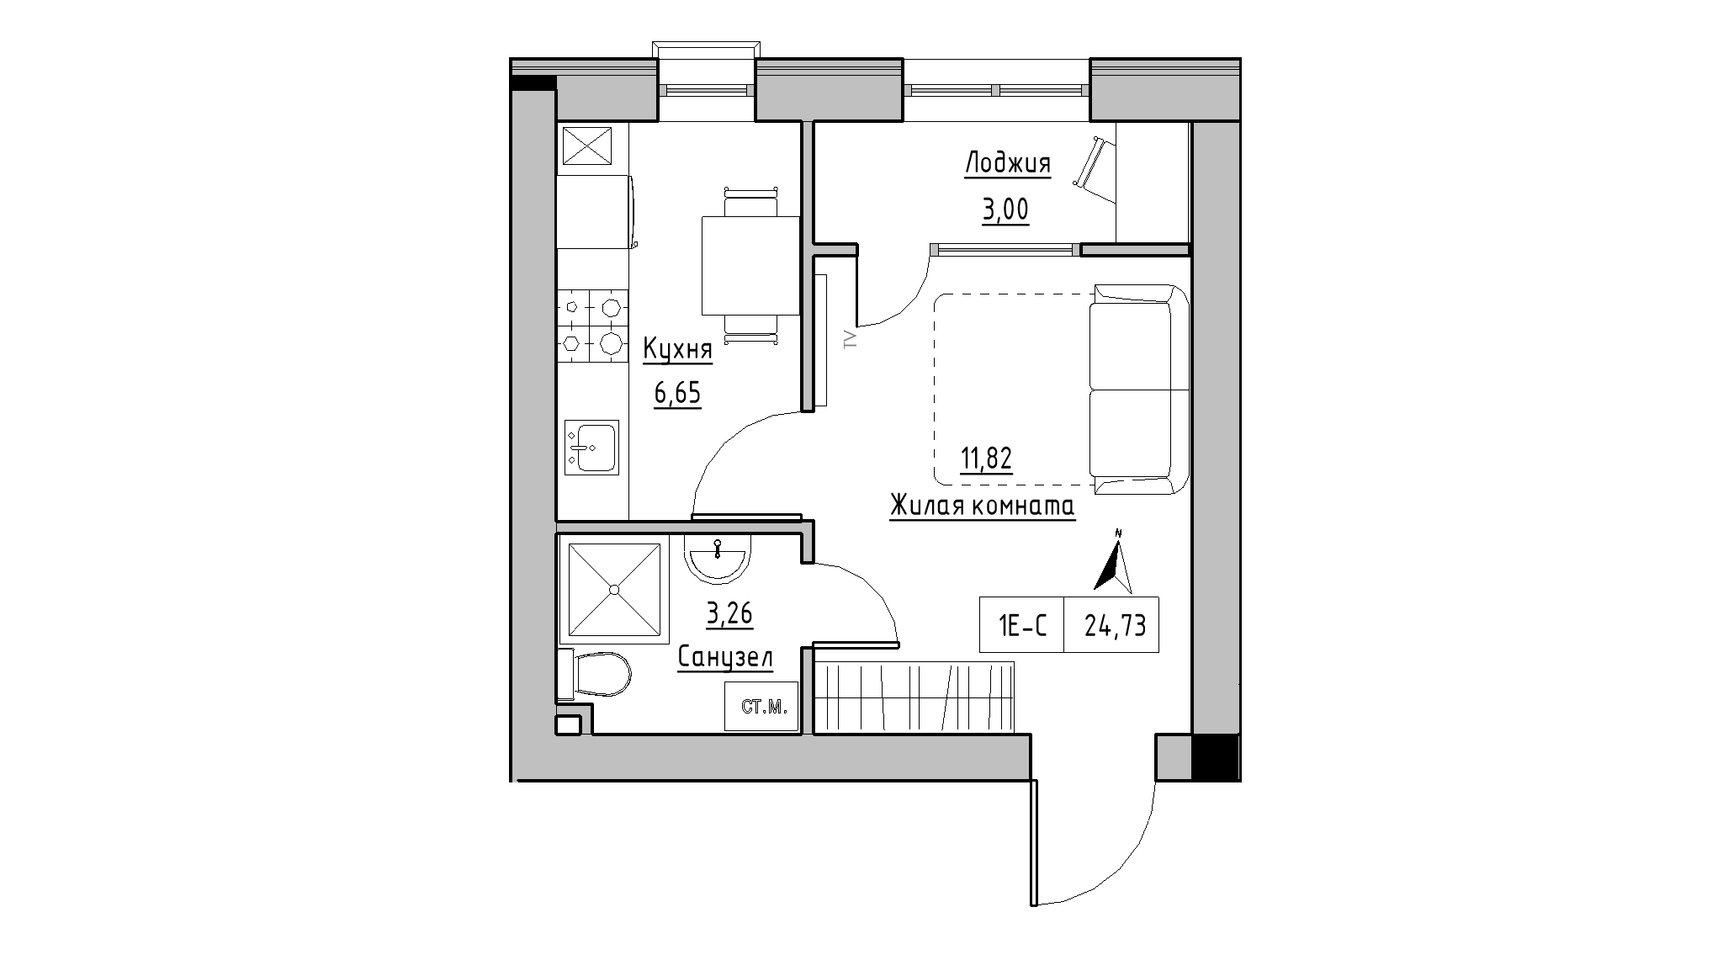 Planning 1-rm flats area 24.73m2, KS-010-01/0004.